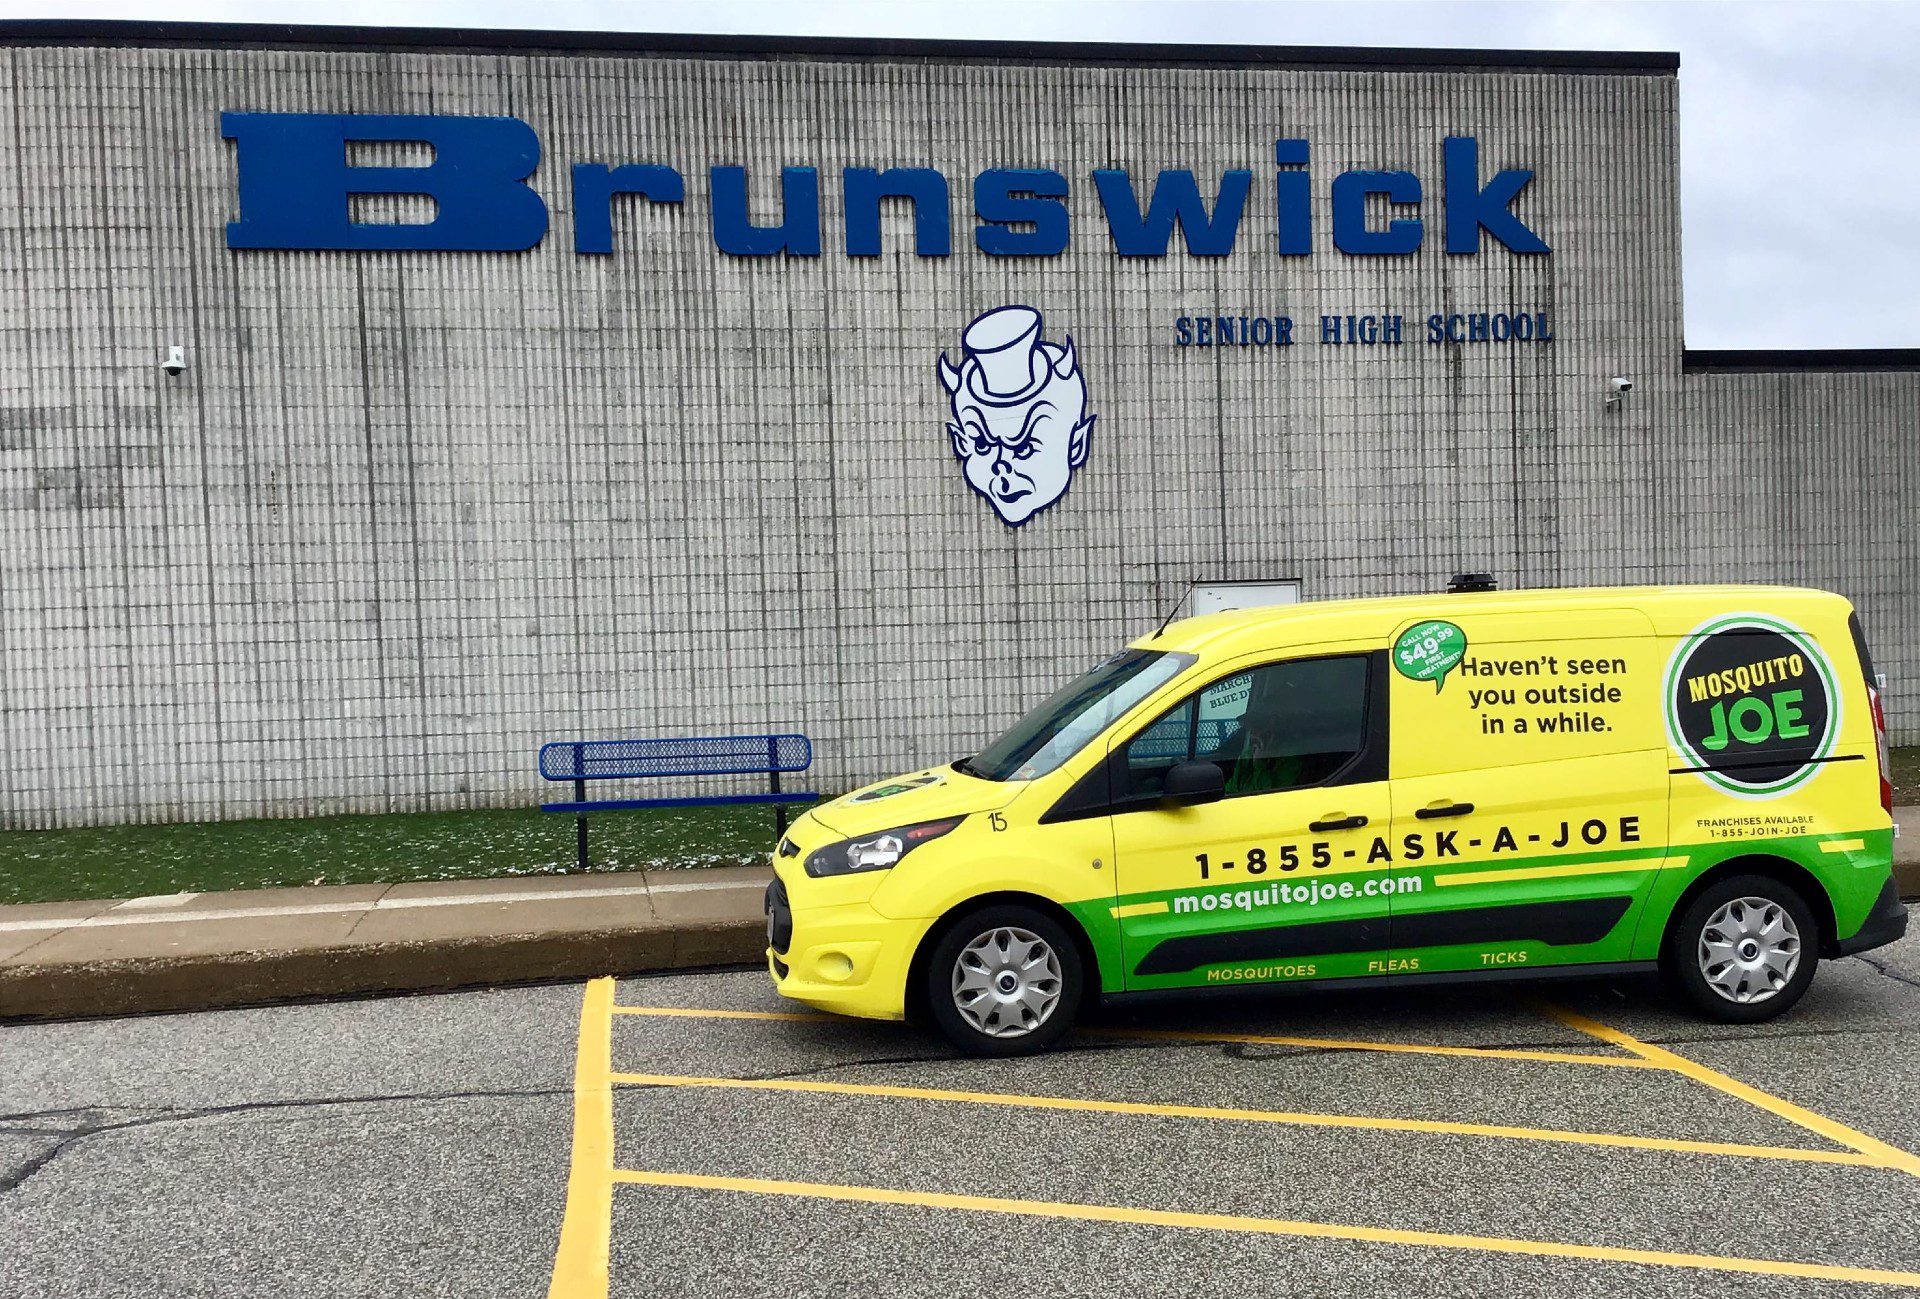 Mosquito Joe Van parked outside of Brunswick High School in Brunswick, OH